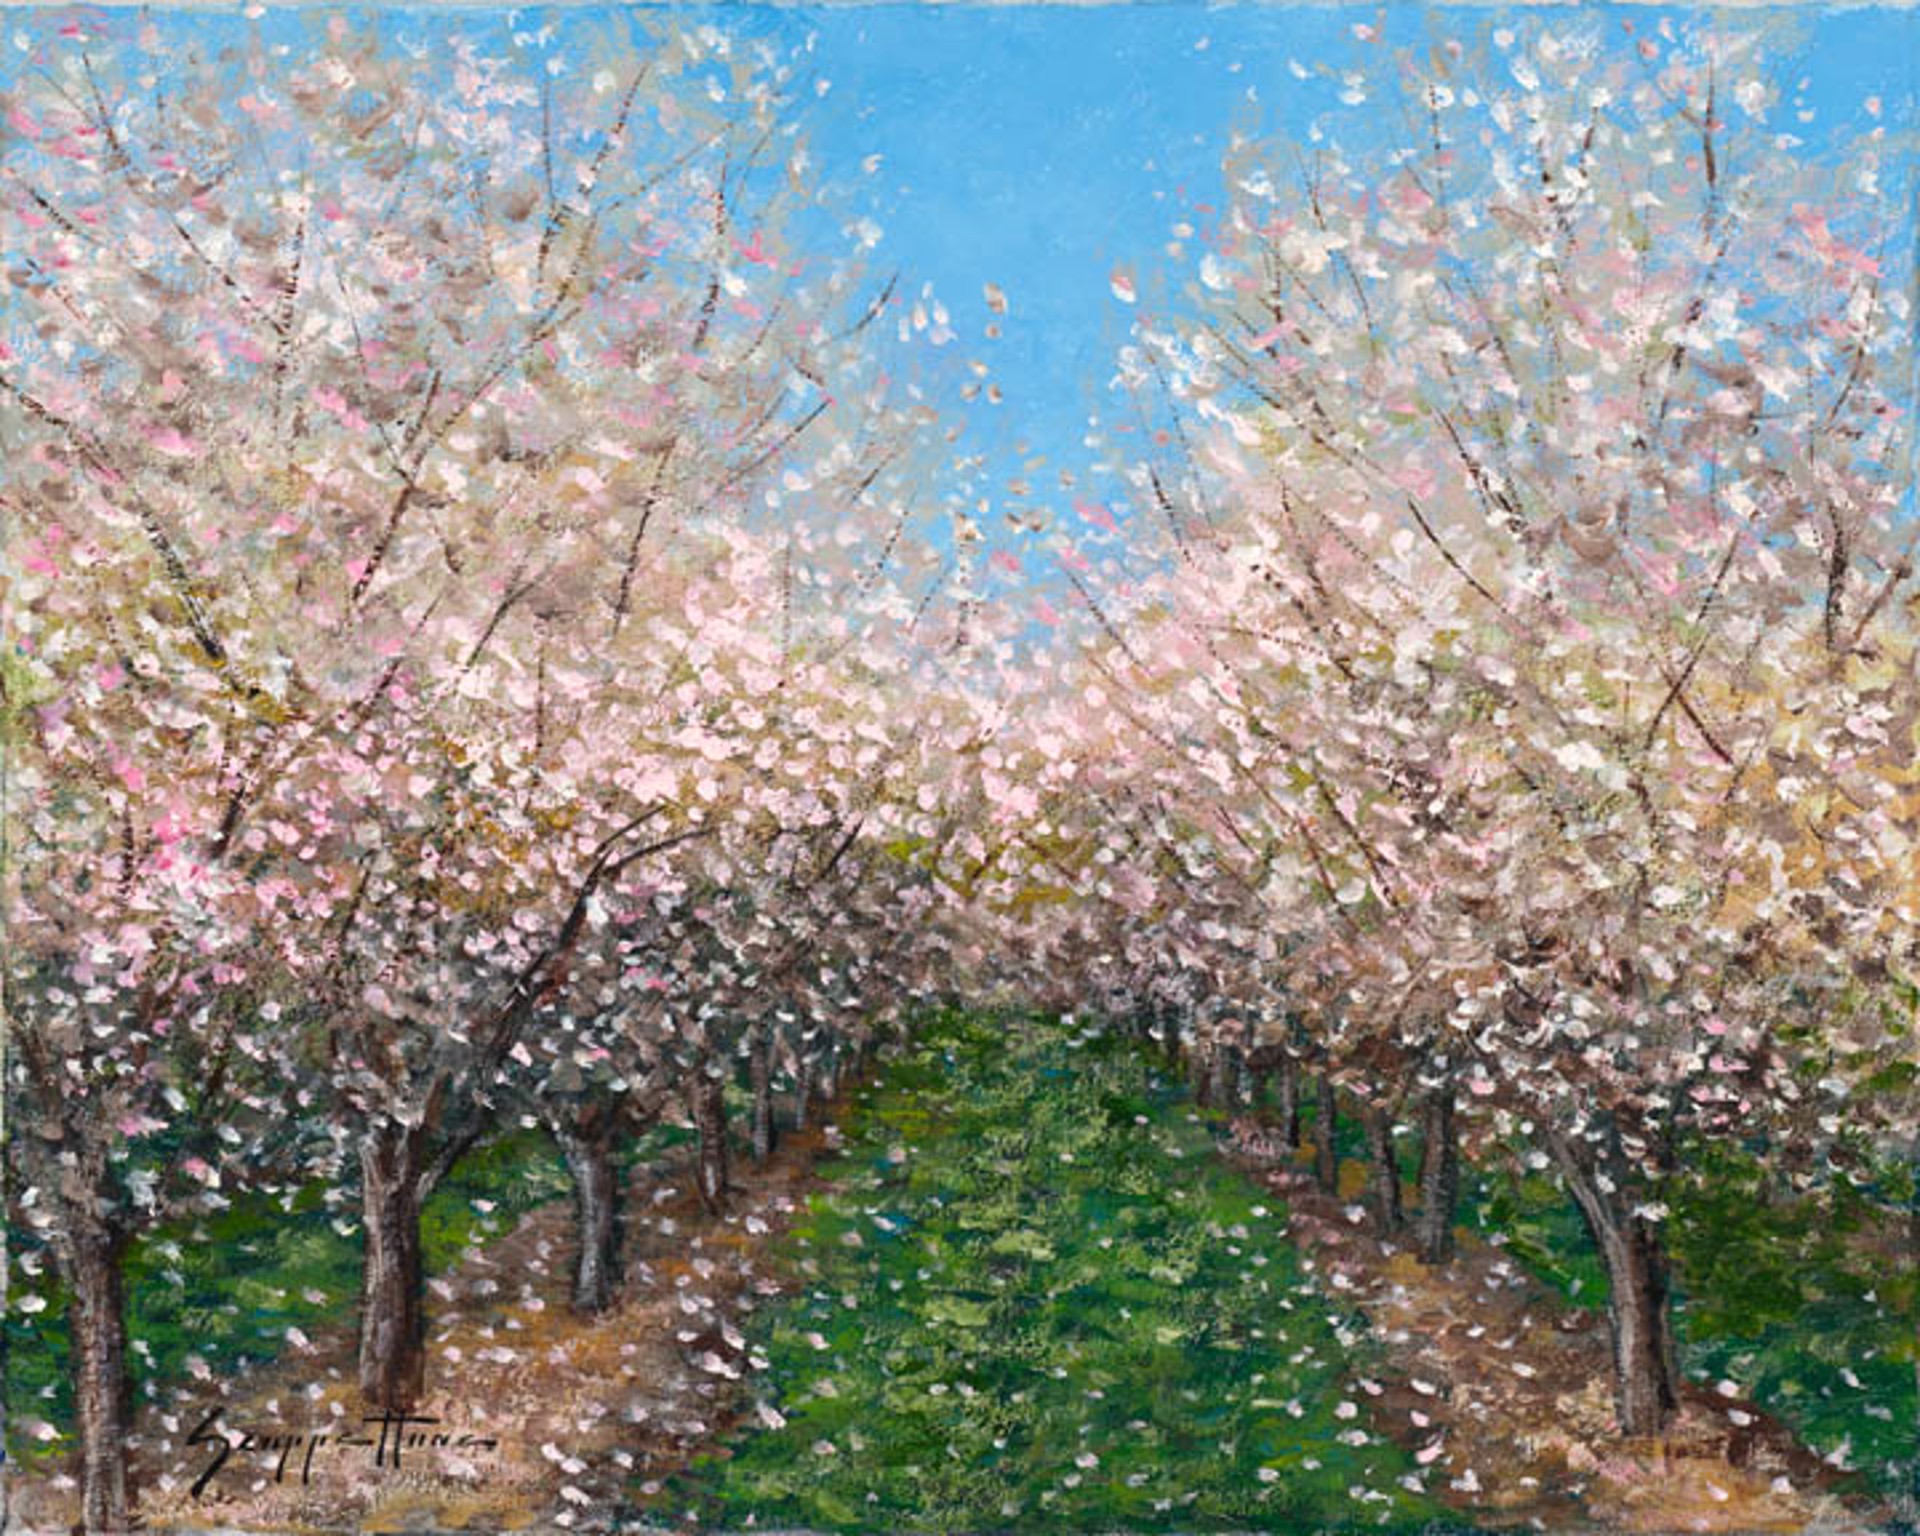 Almond Blossom by James Scoppettone